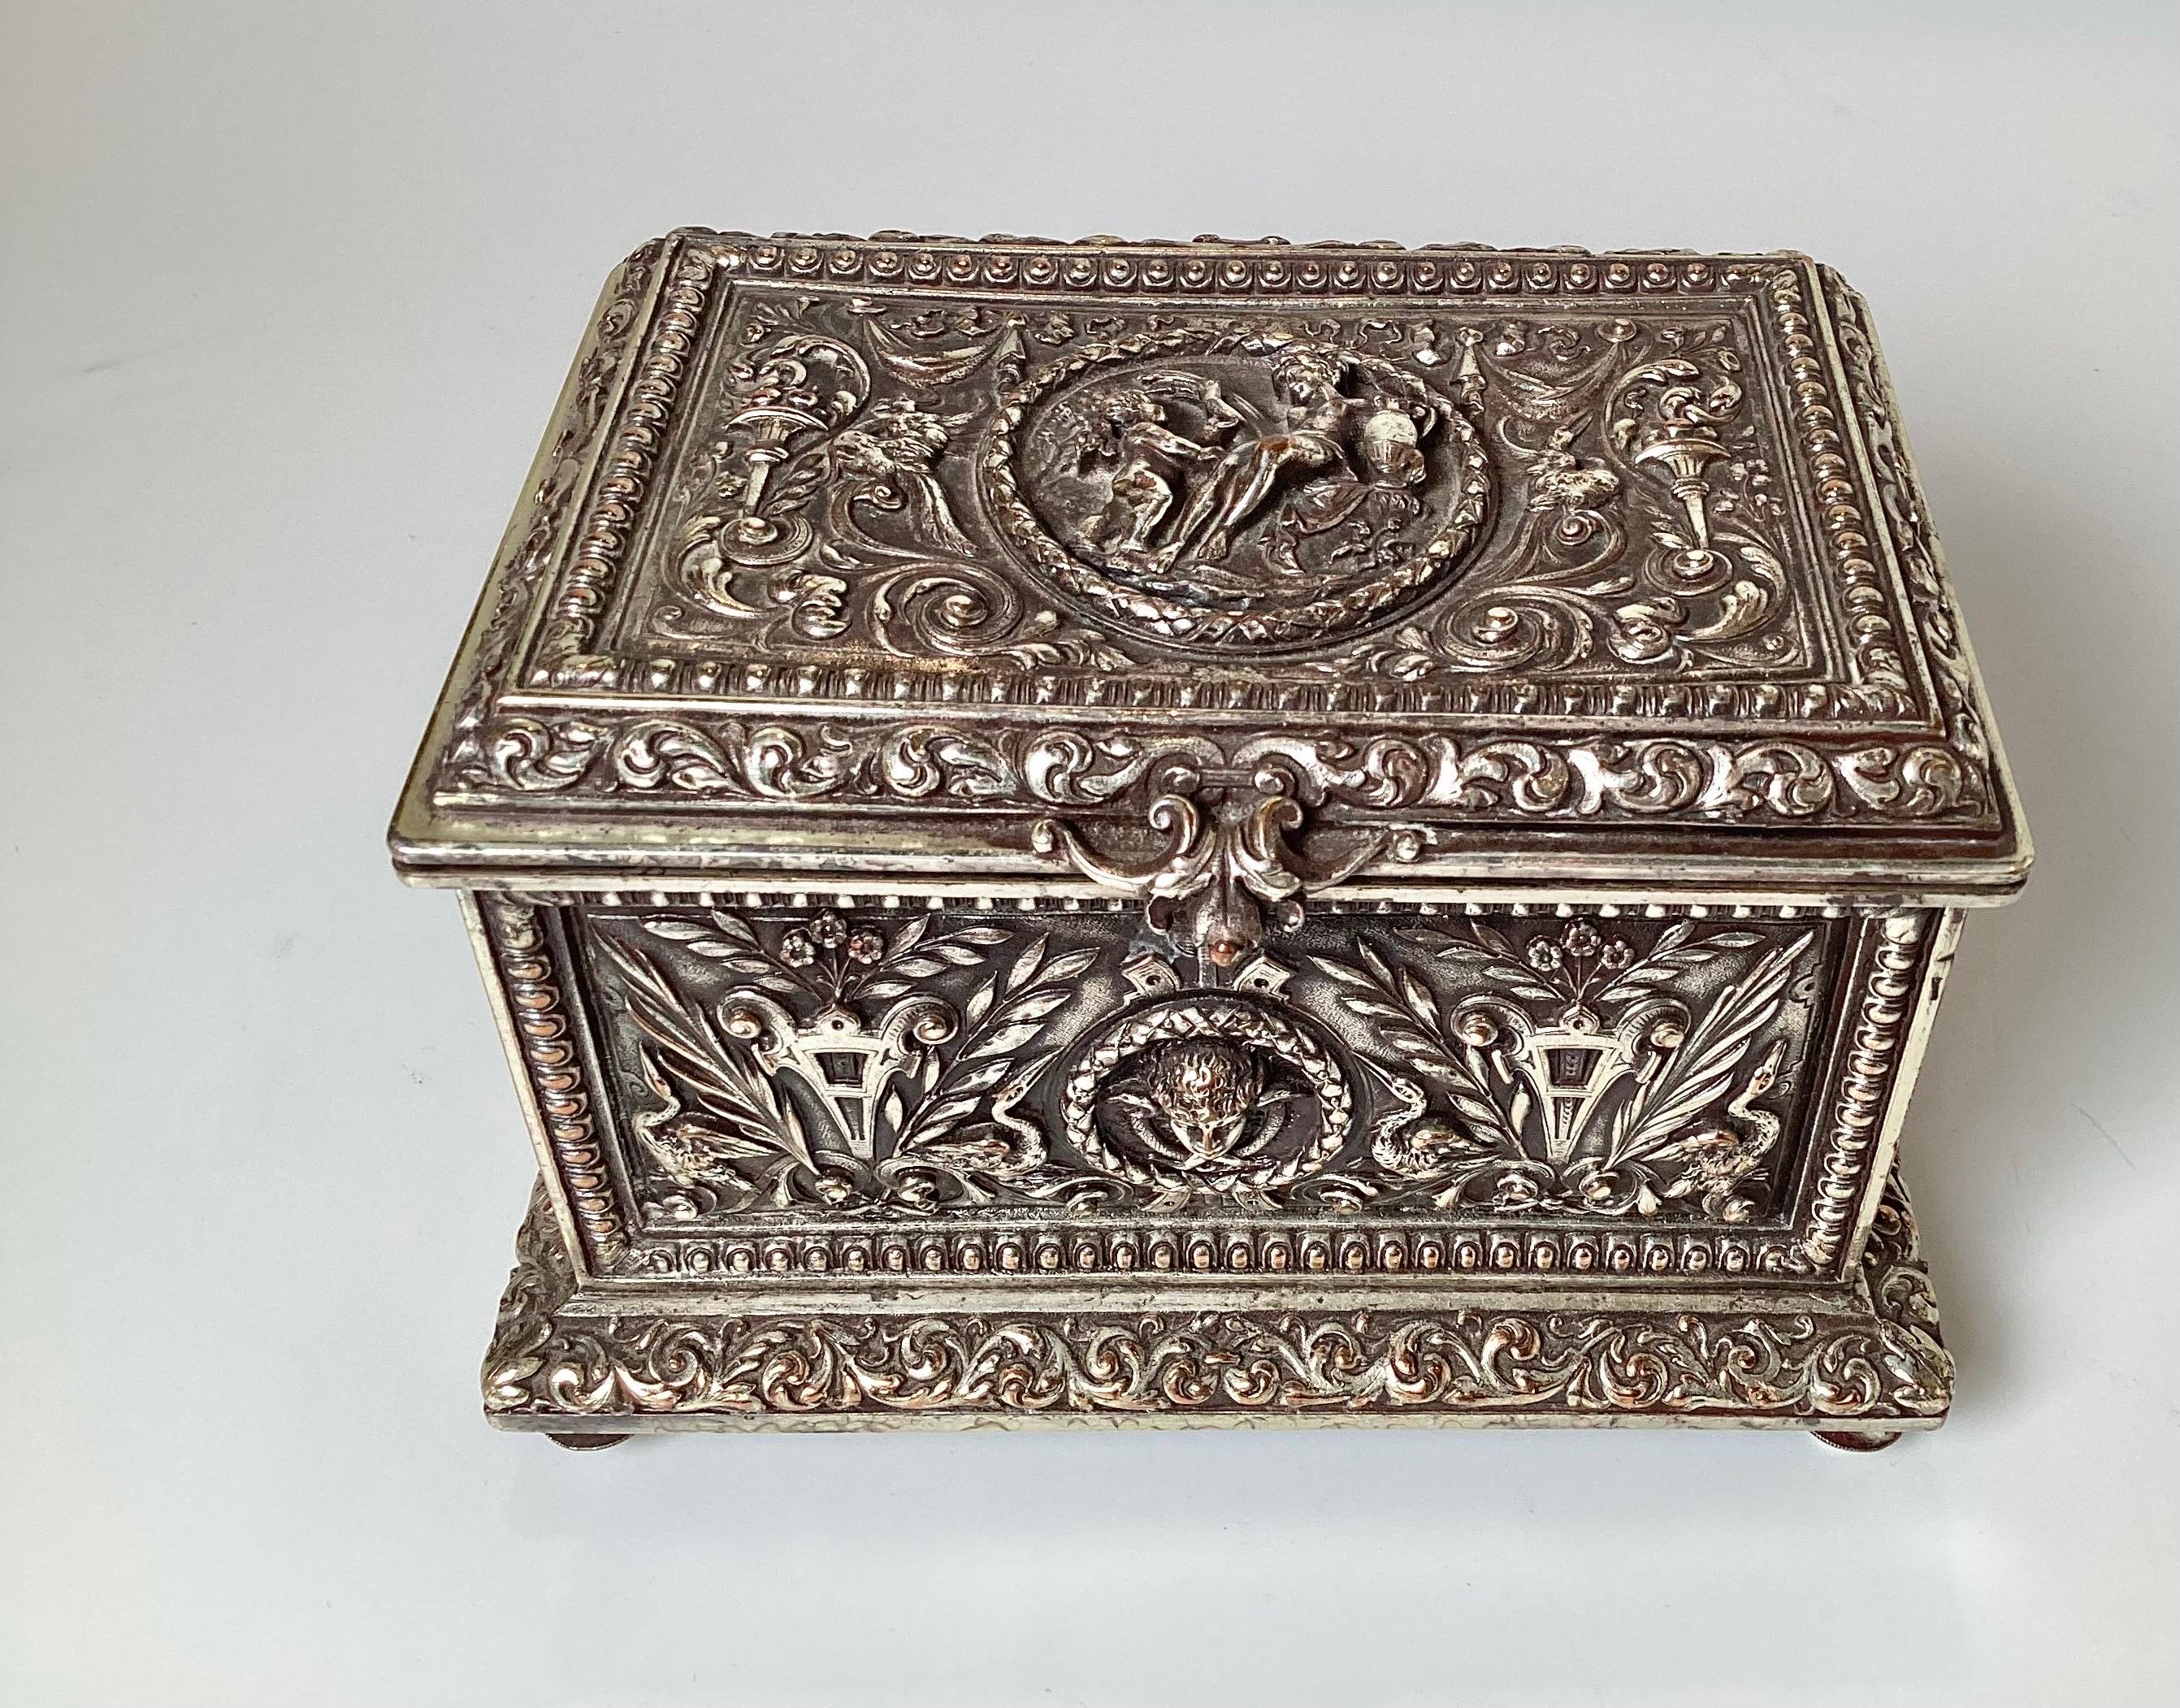 Renaissance Revival 19th Century English Silvered Bronze Hinged Lid Box